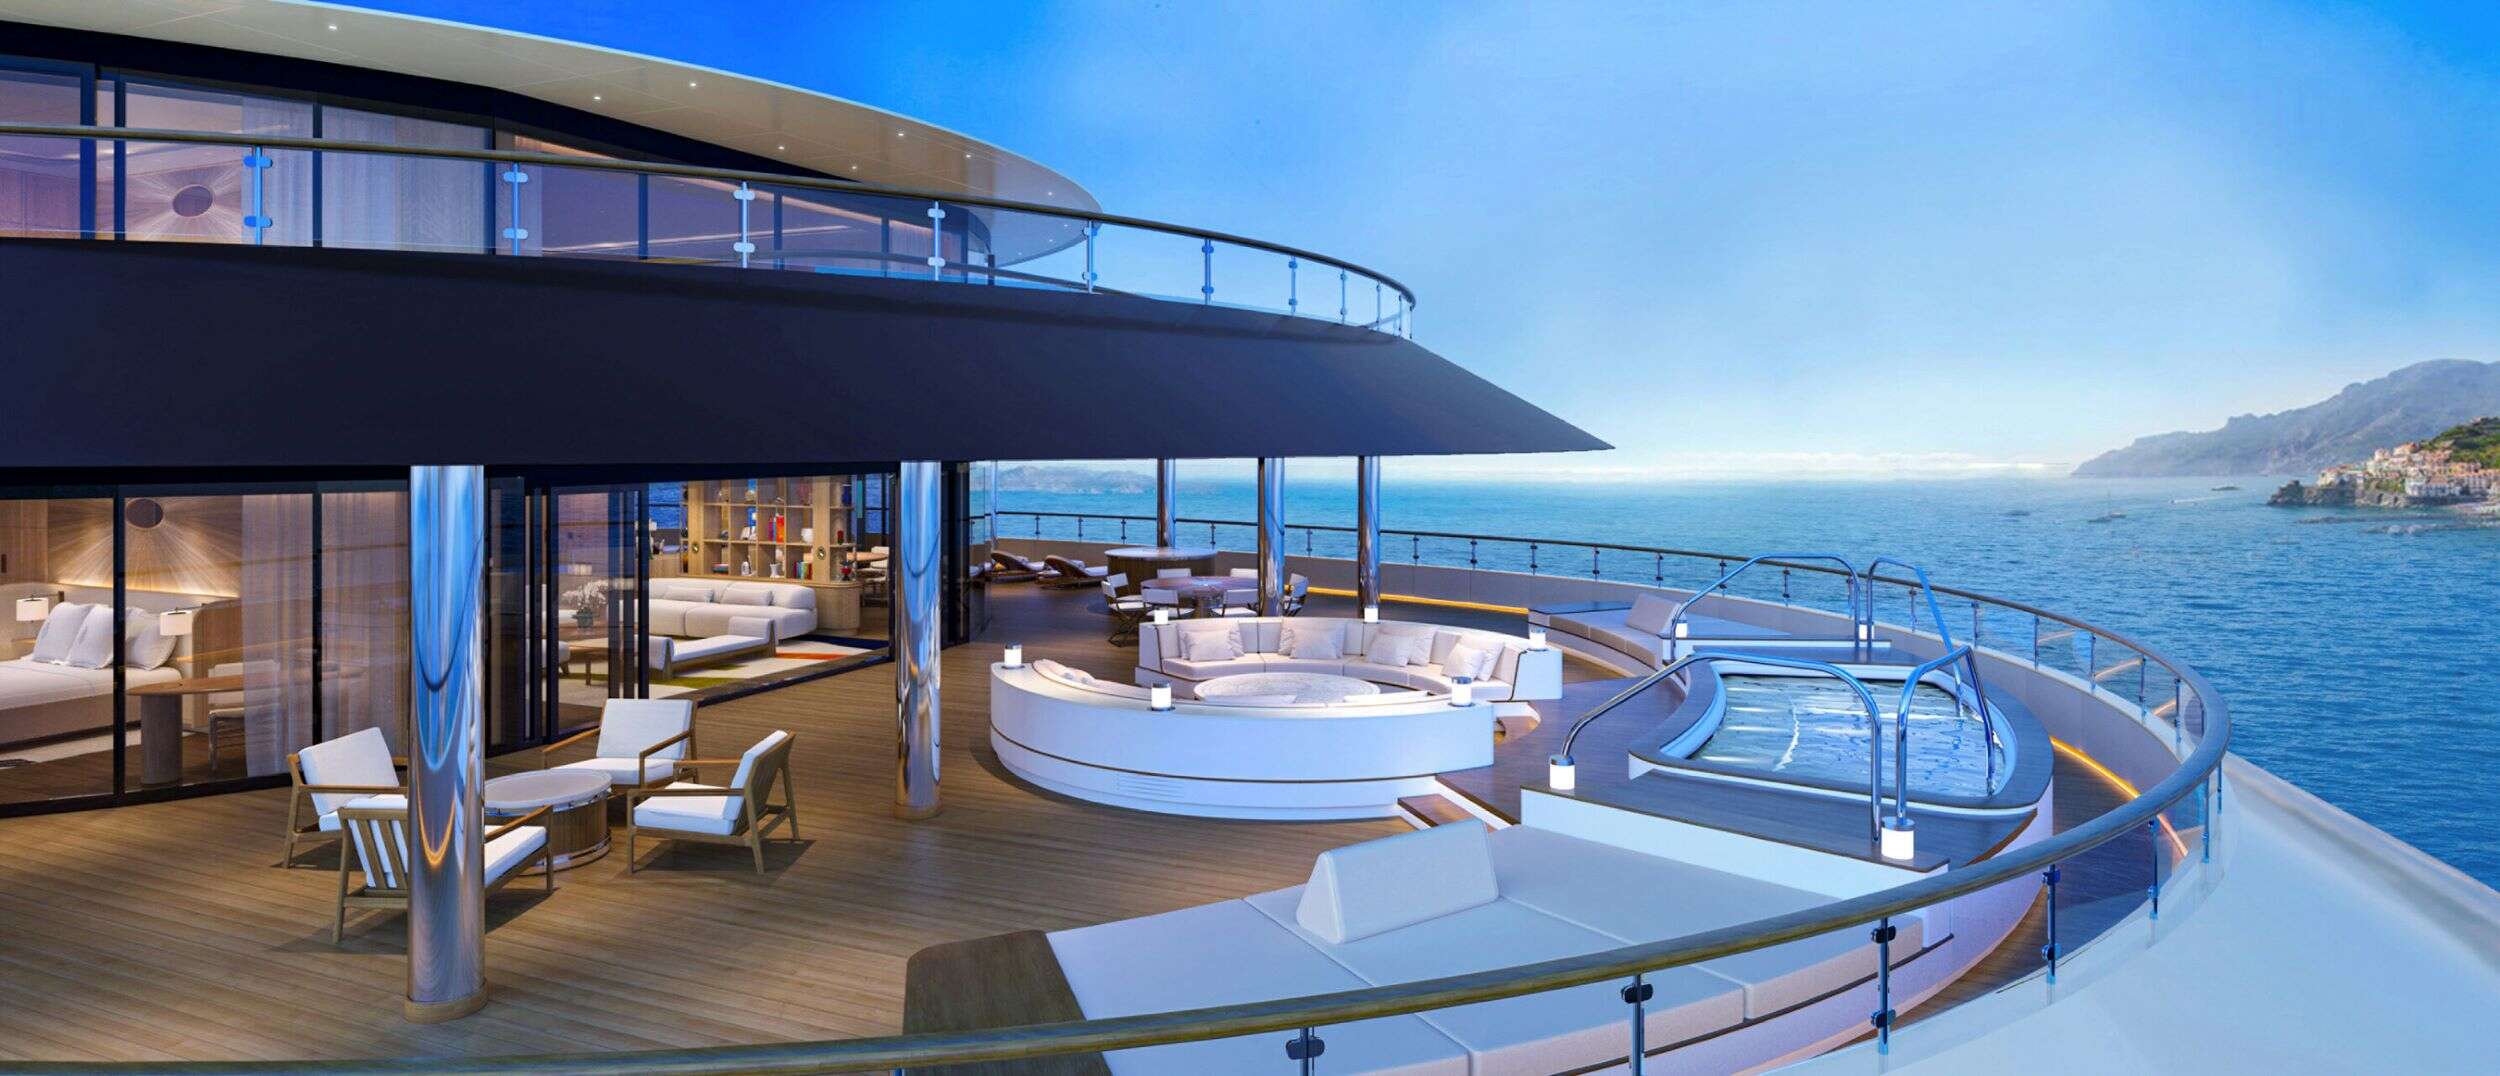 The Loft Suite Terrace on the Four Seasons Yacht